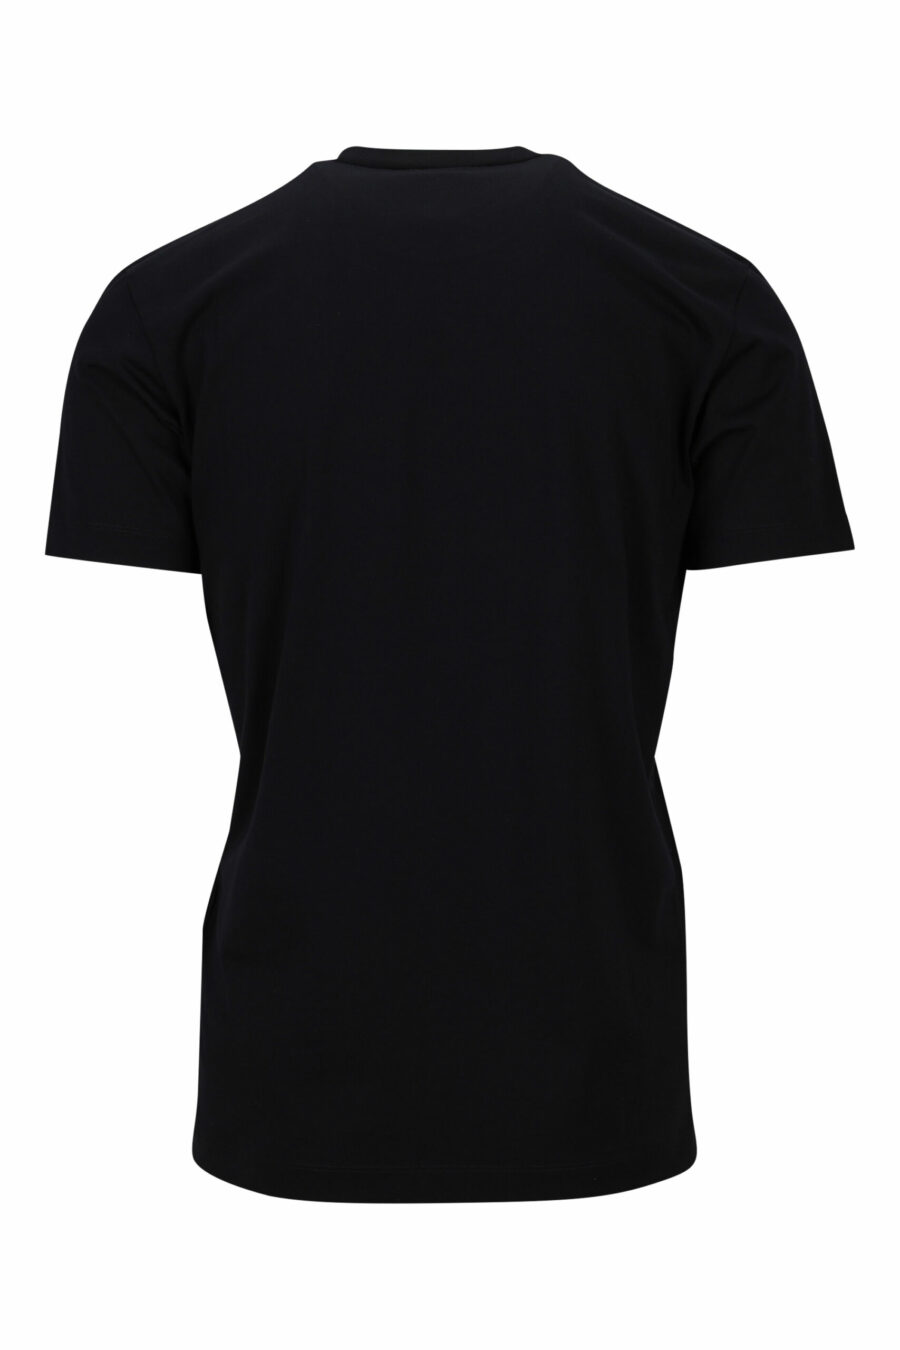 T-shirt preta com minilogo "ceresio 9, milano" - 8054148505264 1 scaled